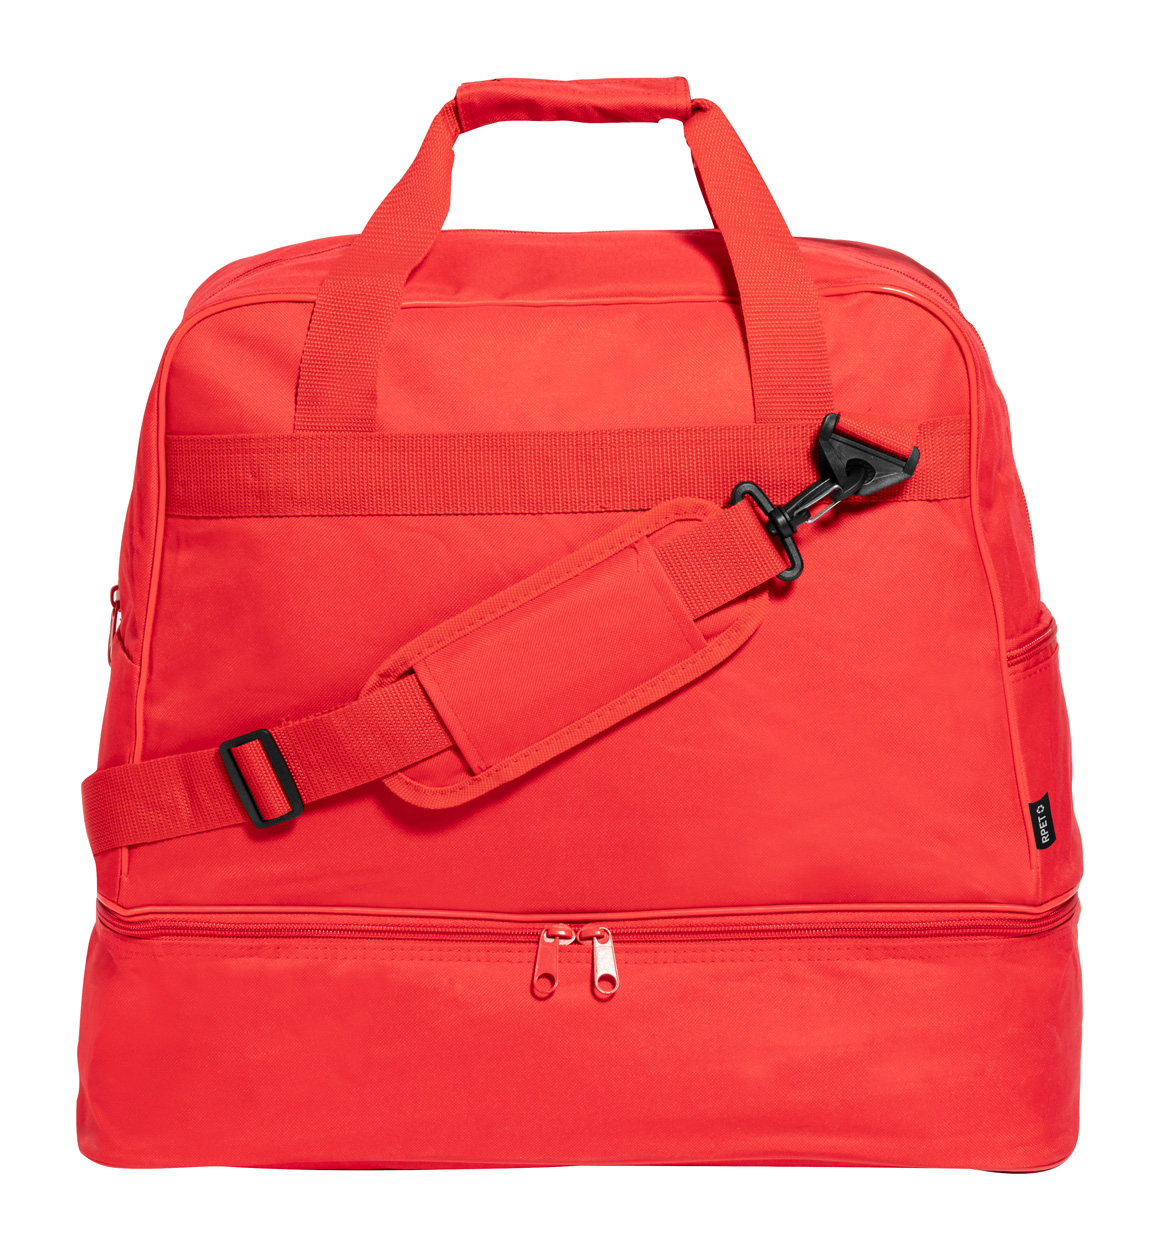 Wistol RPET sports bag - red